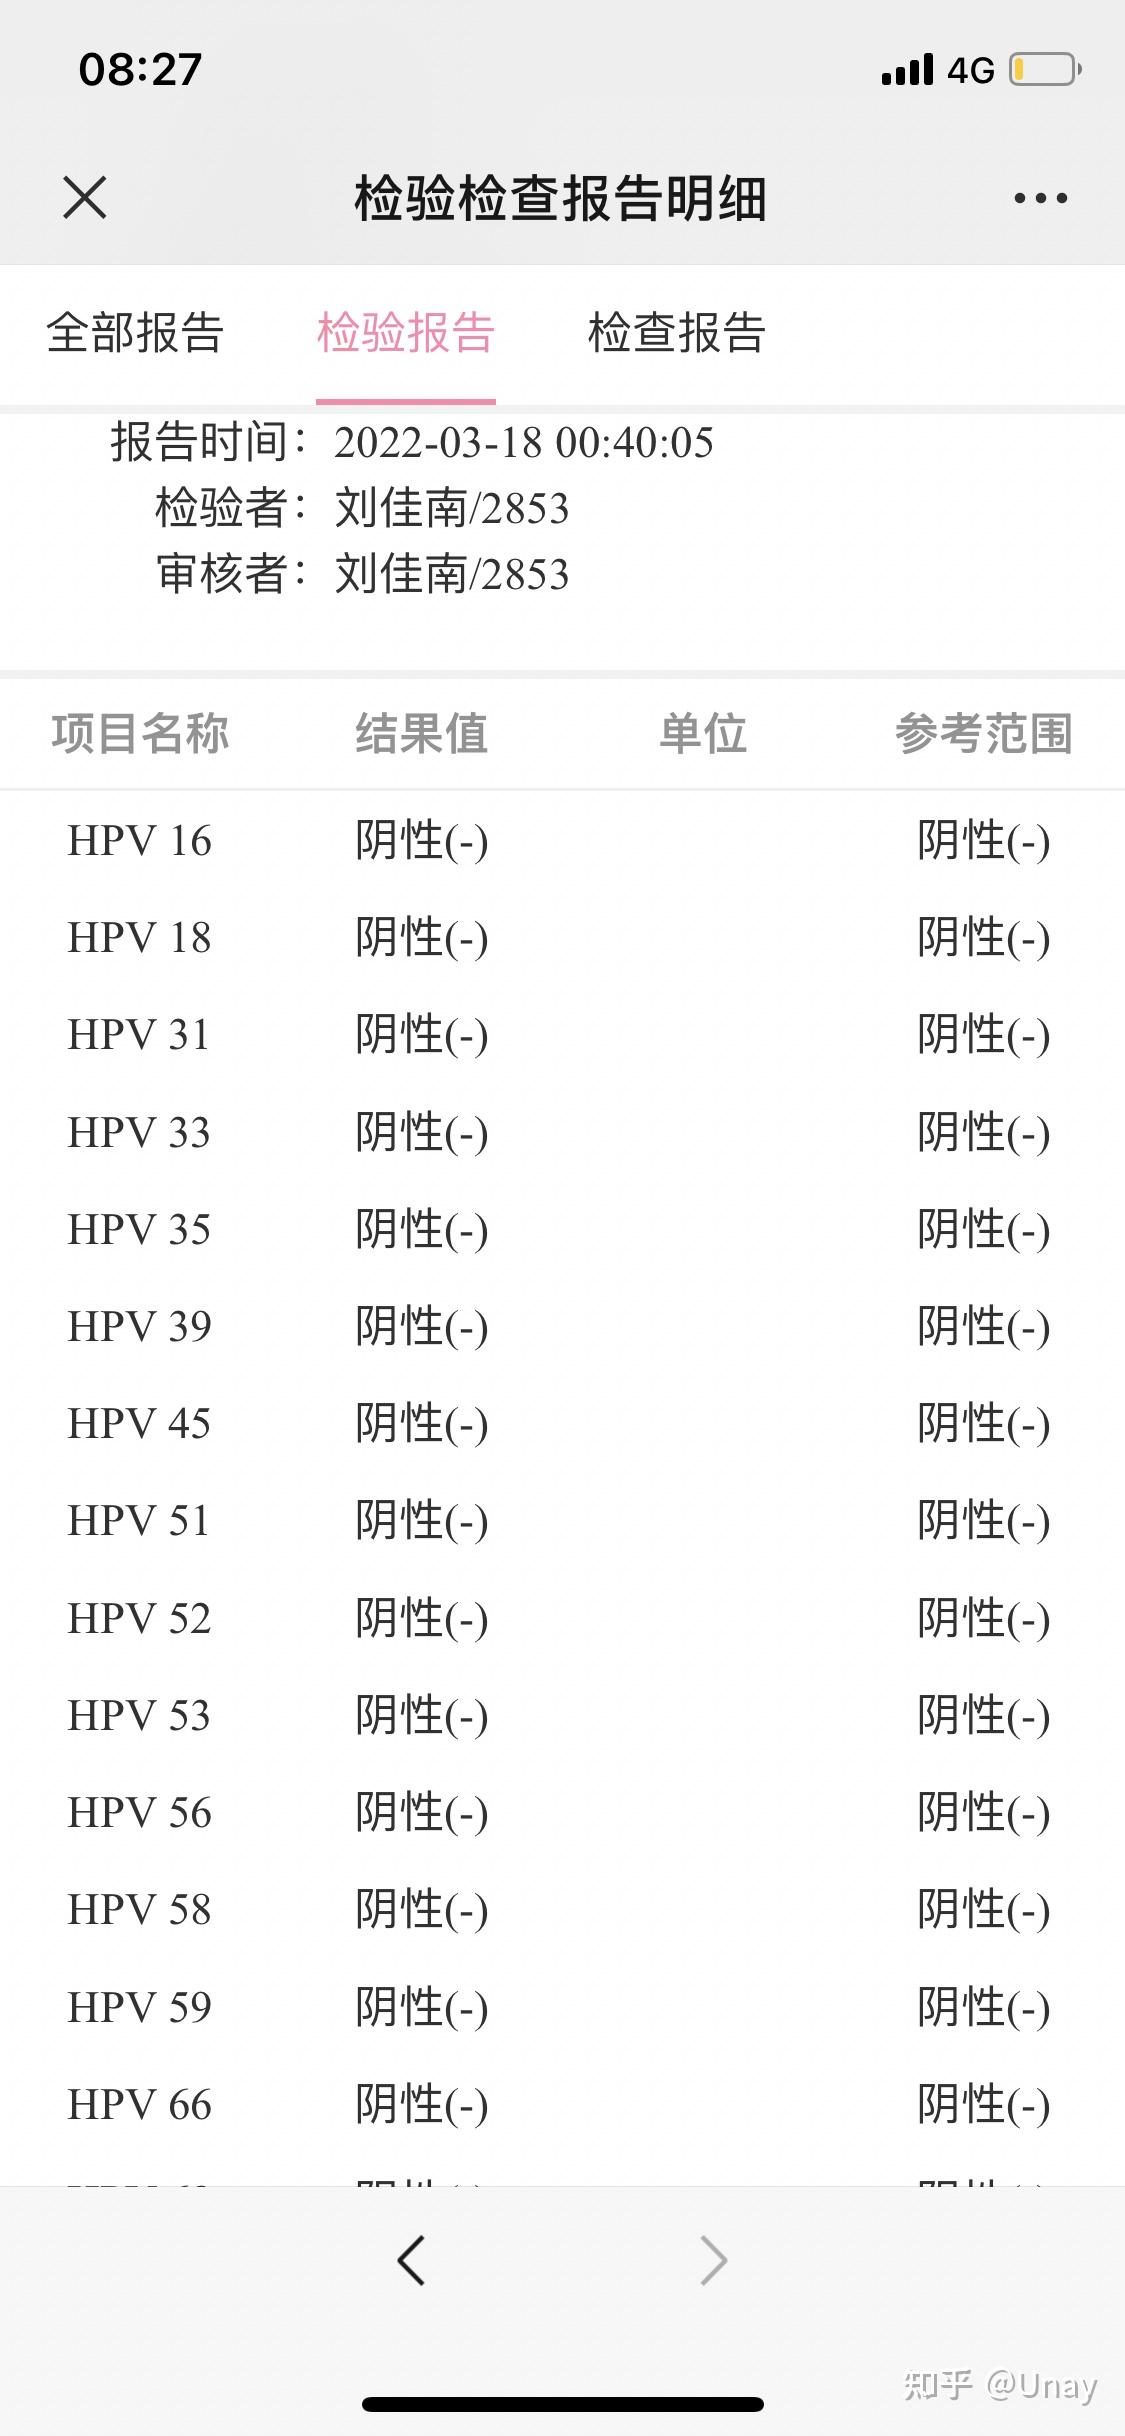 hpv16 52阳性,宫颈活检高度病变cin2,leep锥切手术,宫颈管原位腺癌